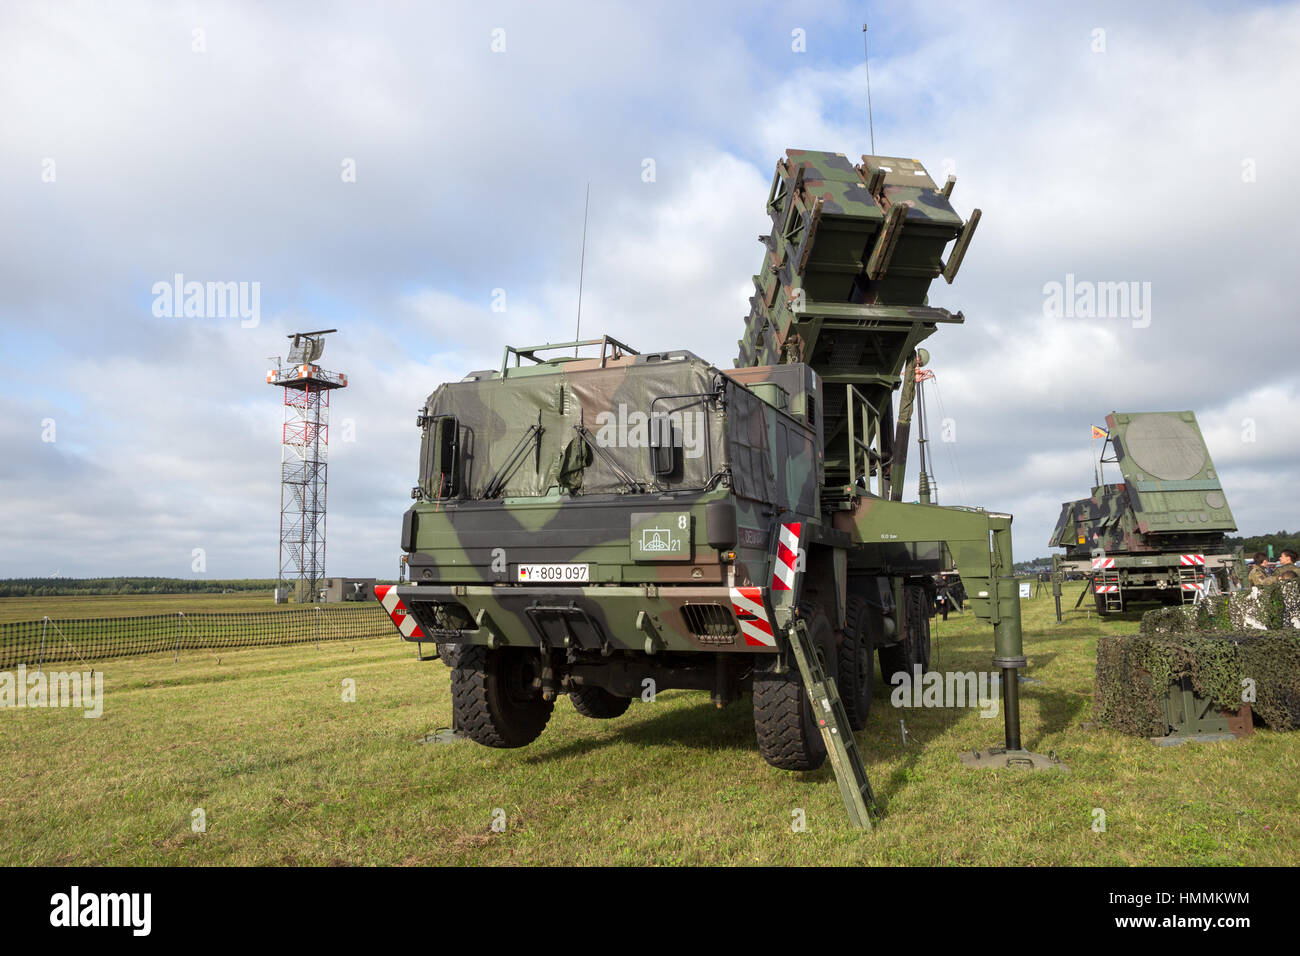 LAAGE, Germania - Agosto 23, 2014: un esercito tedesco MIM mobile-104 Patriot missili terra-aria (SAM) sistema sul display durante la Laage airbase open house Foto Stock